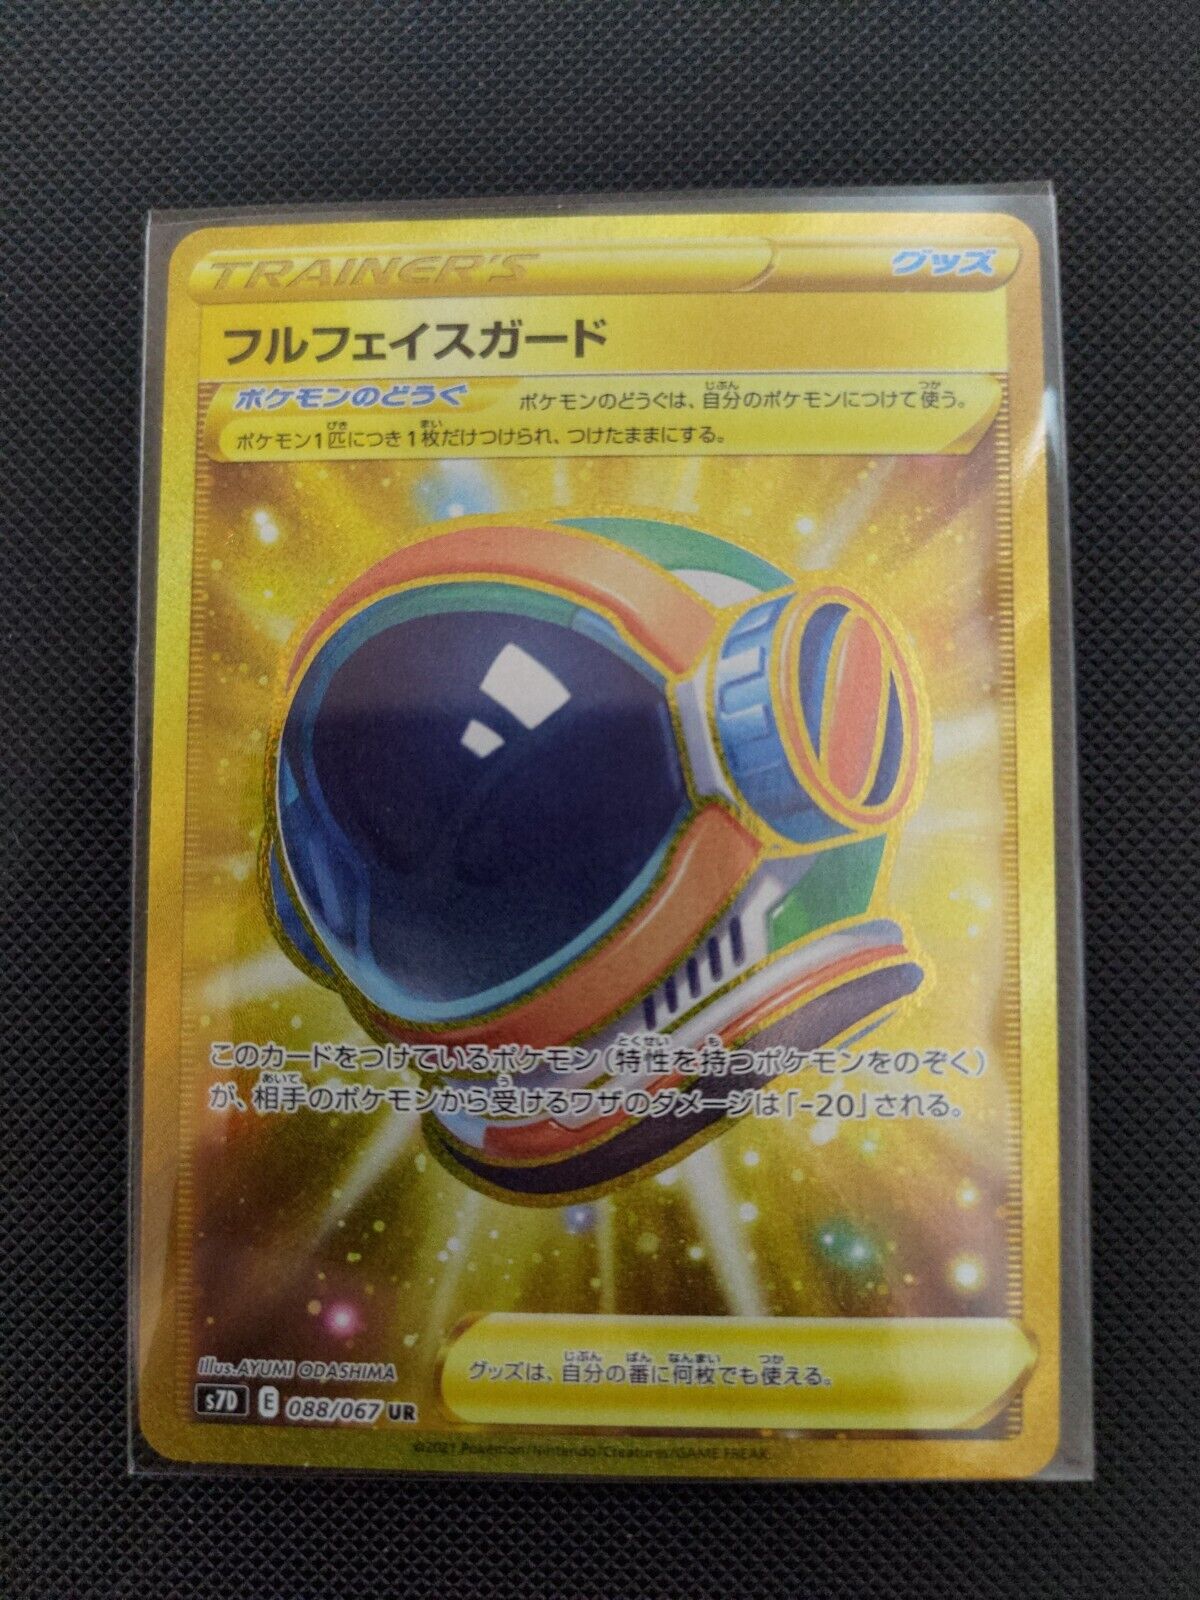 Full Face Guard UR 088/067 s7D Gold Ultra Rare Pokemon Card Japanese 